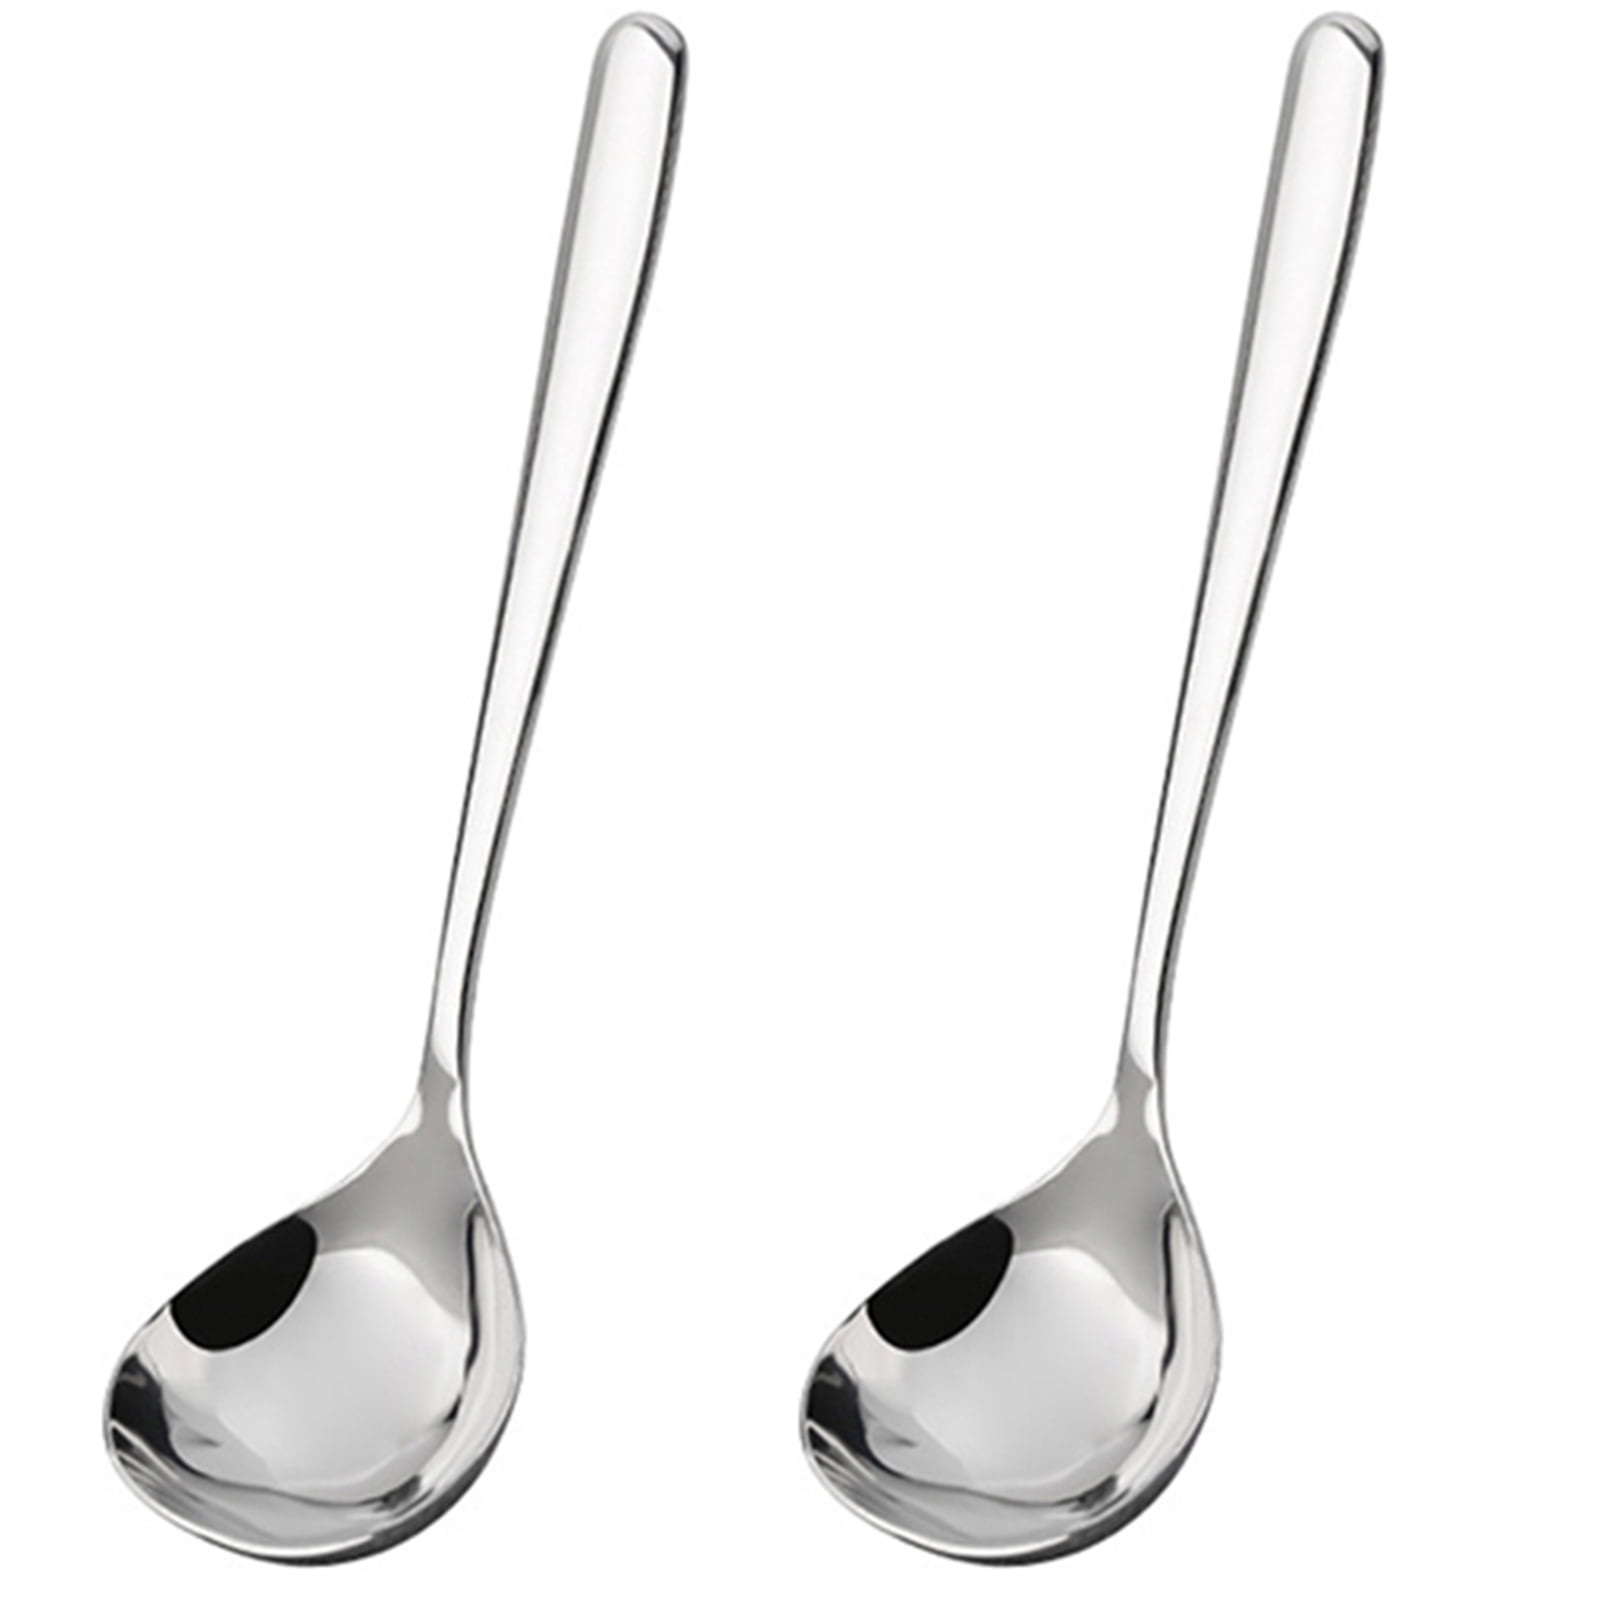 Mini Clear Tasting Spoons Plastic Gravy Ladle Sauce Ladle Small Serving Spoon 